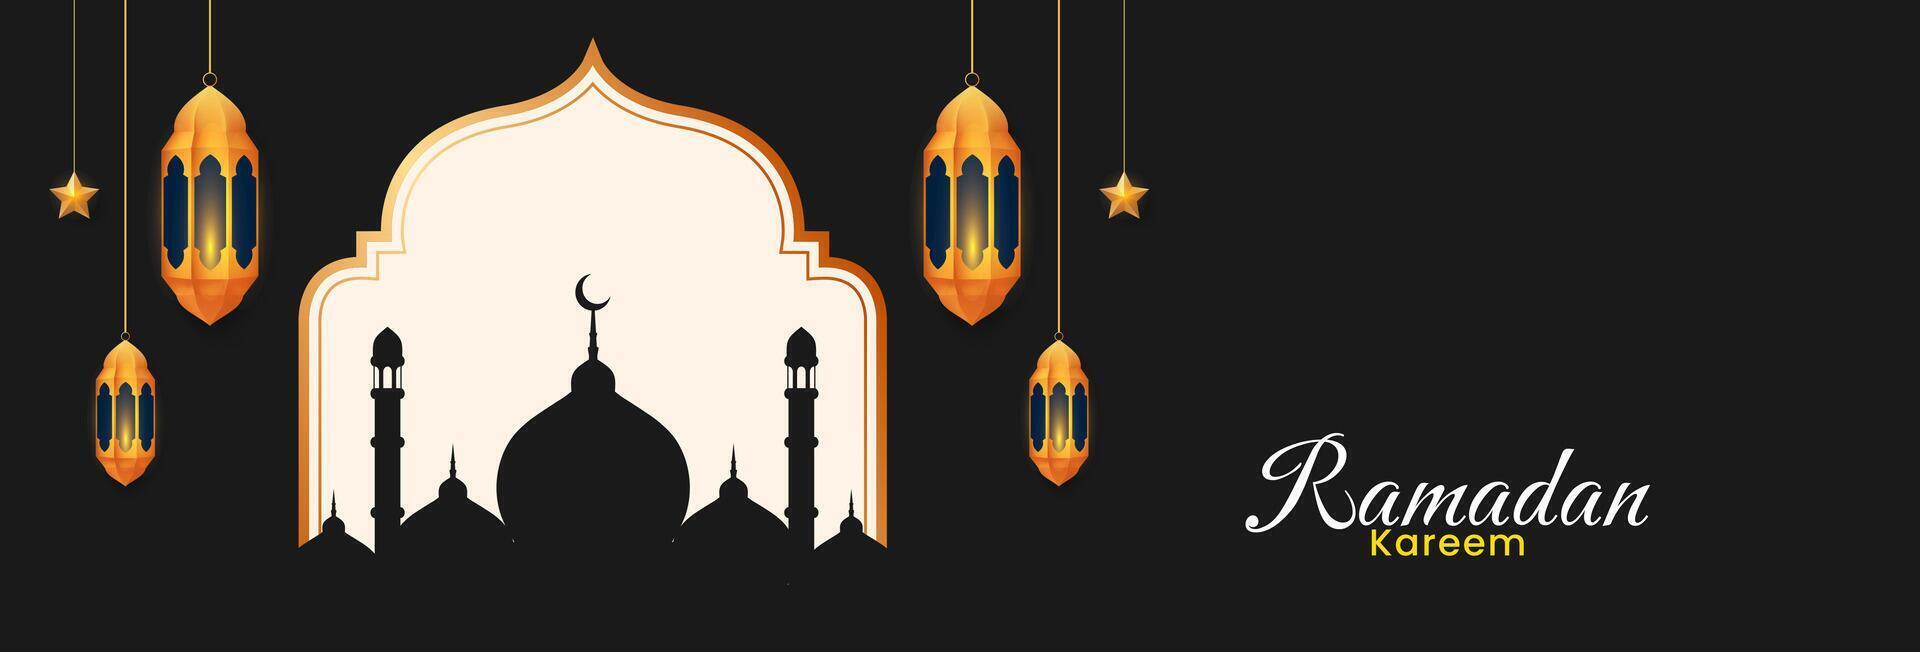 Ramadan kareem. Islamic celebration background design template. Vector illustration